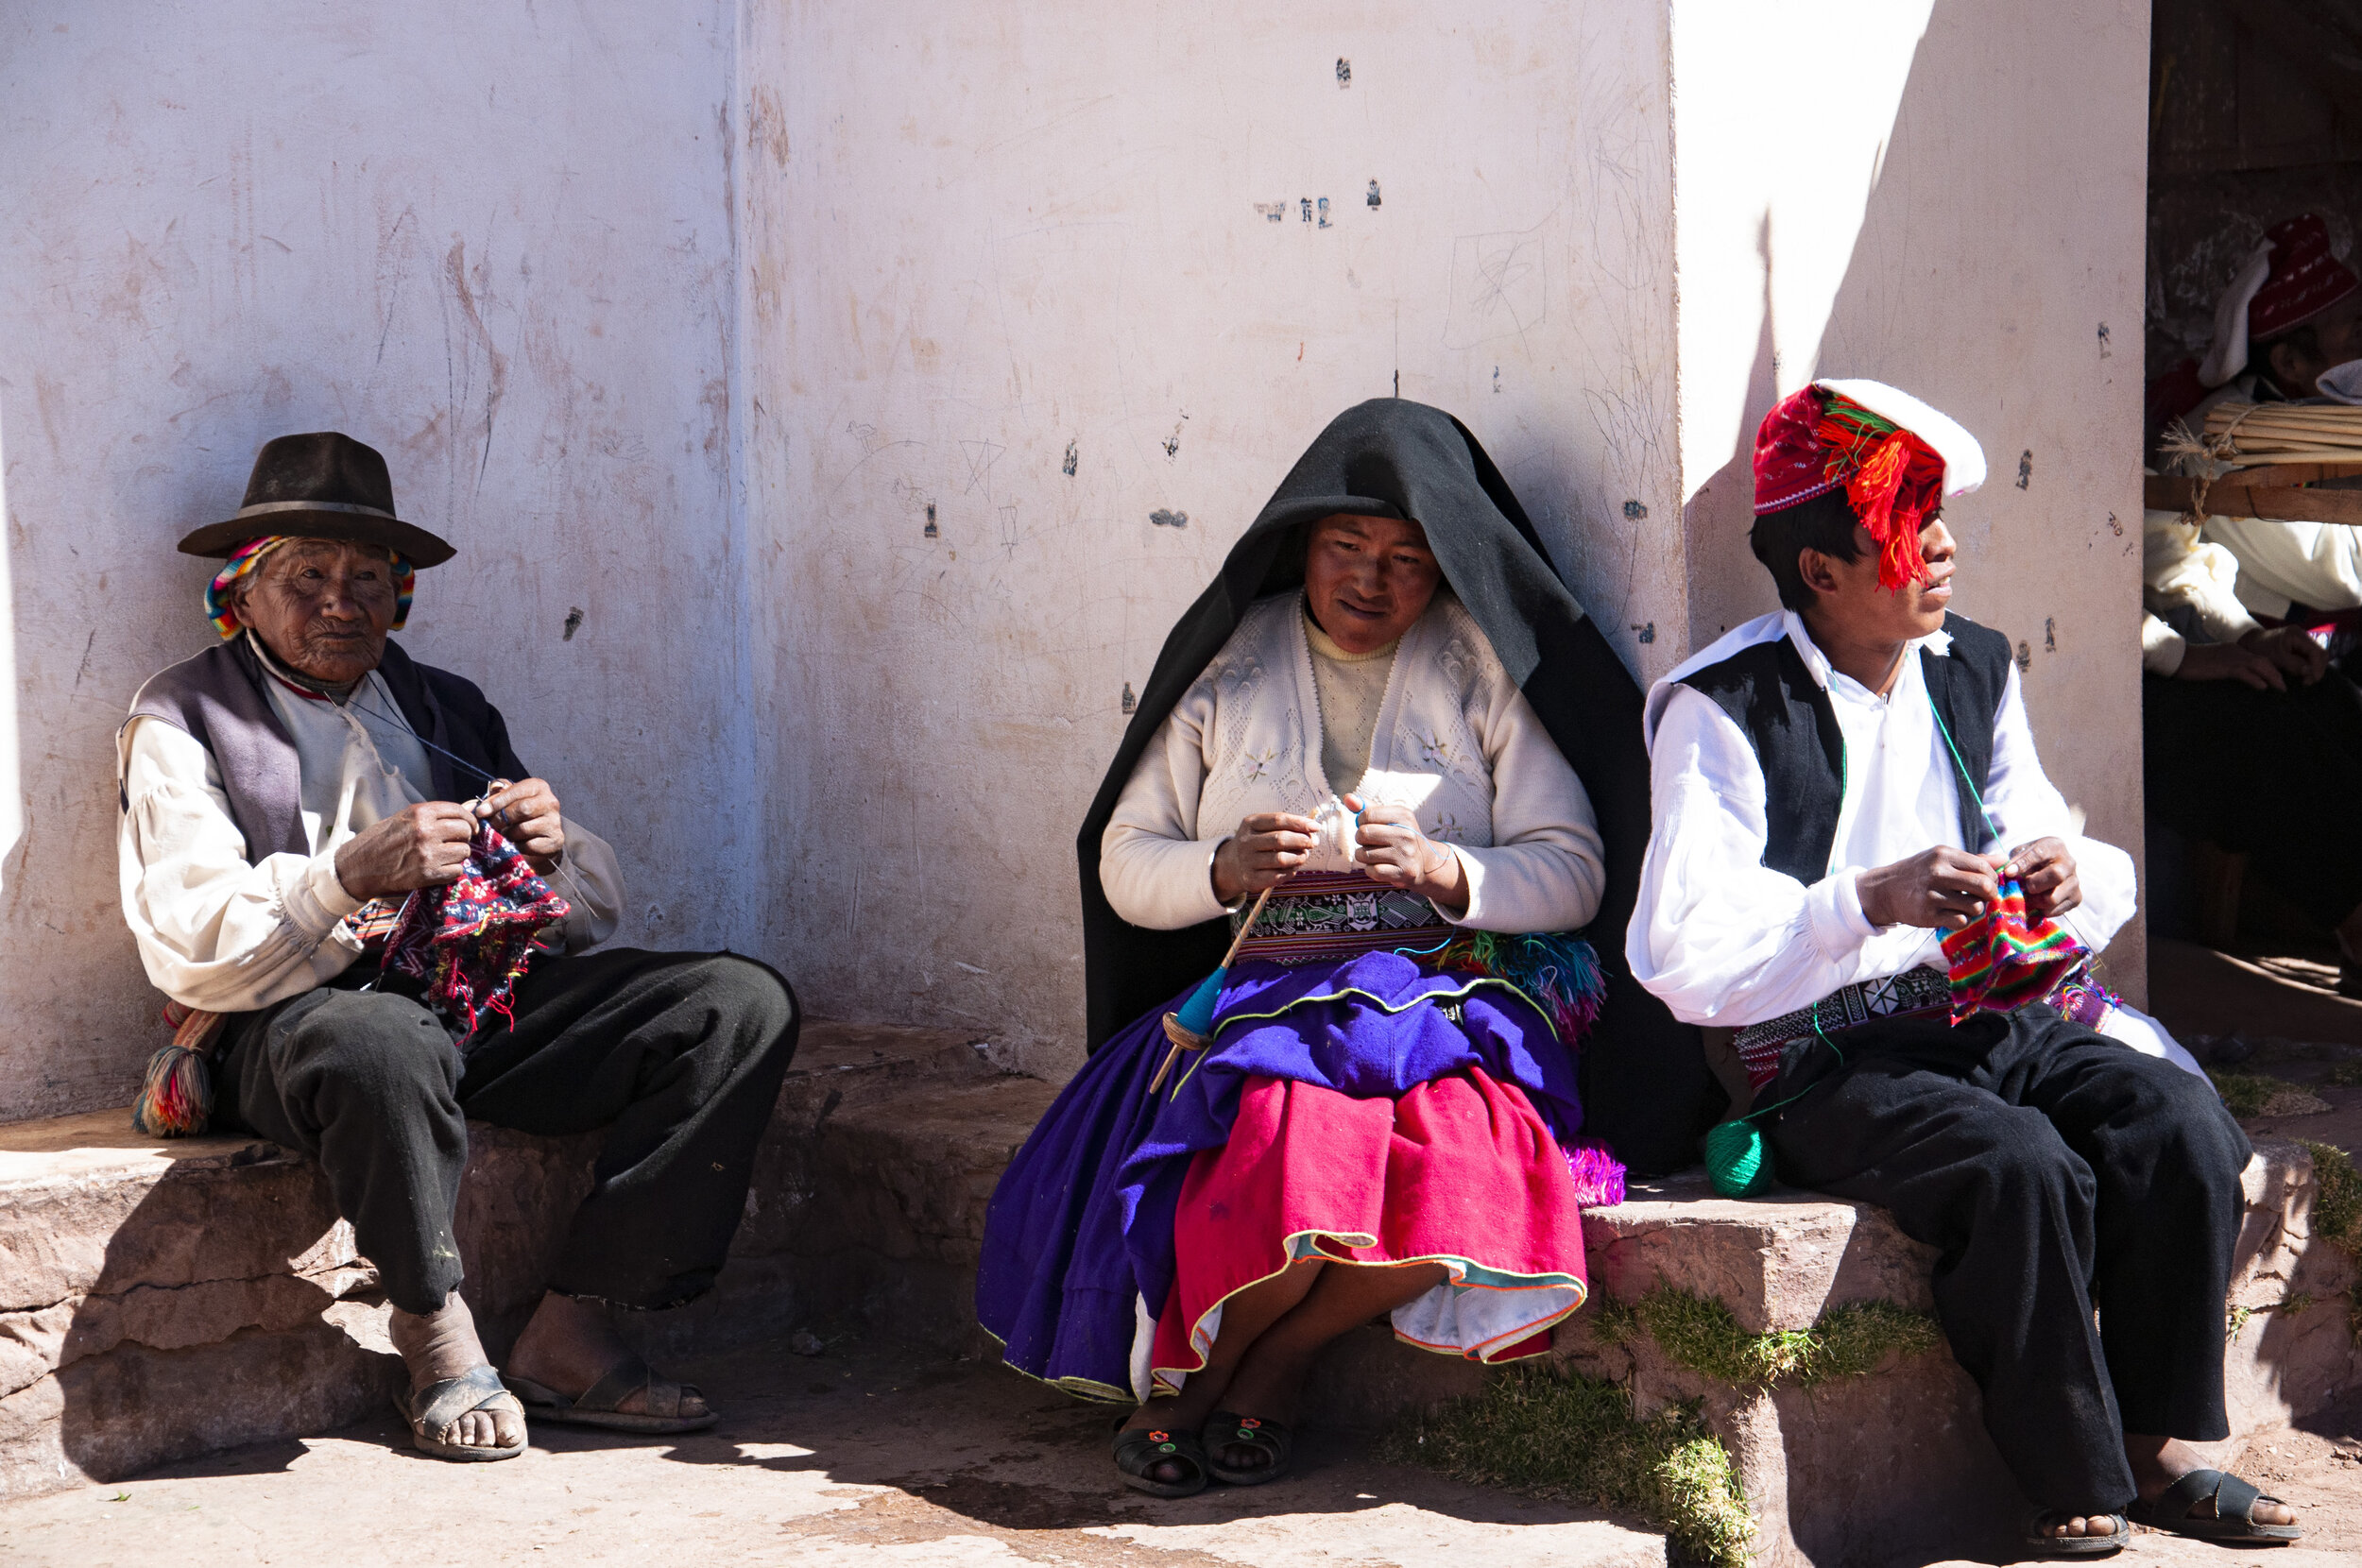 Peru_2014 08 03_1794.JPG